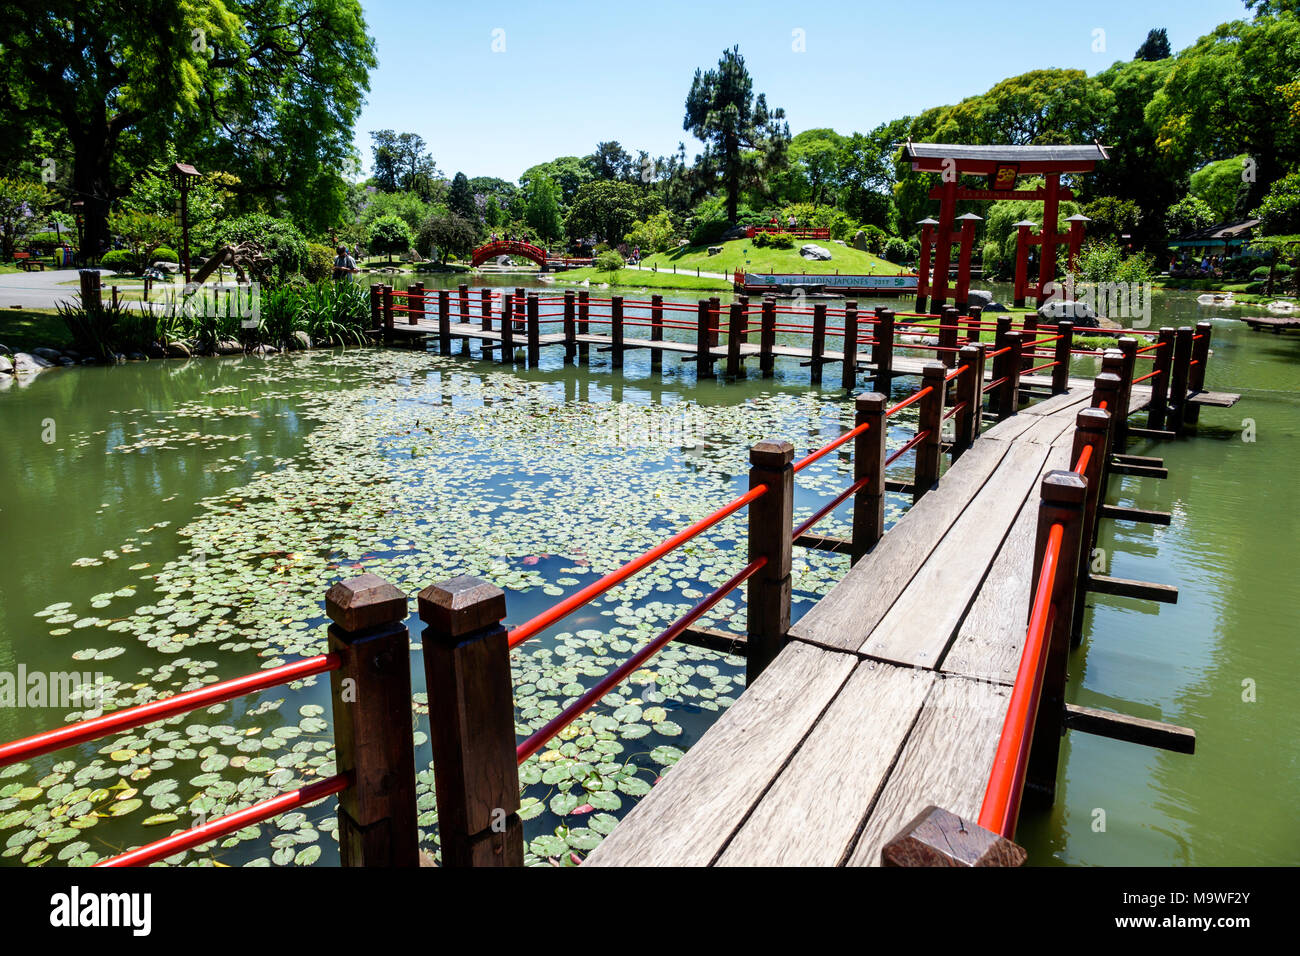 Buenos Aires Argentina,Recoleta,Japanese Garden Jardin Japones,botanical,carp lake,bridge,raised path boardwalk over water,Hispanic,ARG171130083 Stock Photo